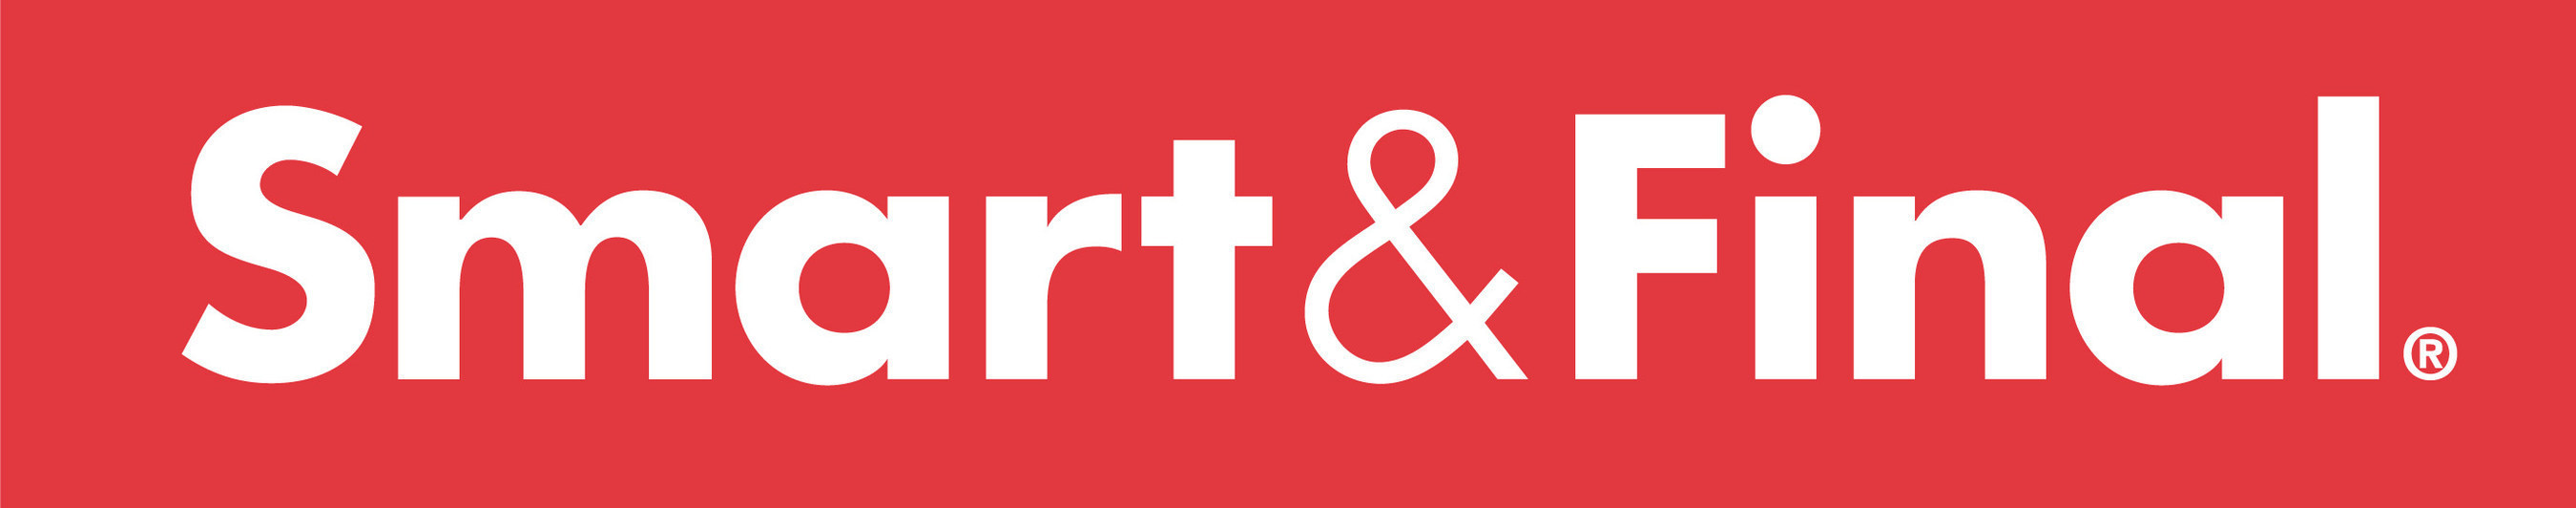 Smart & Final Stores, Inc. logo